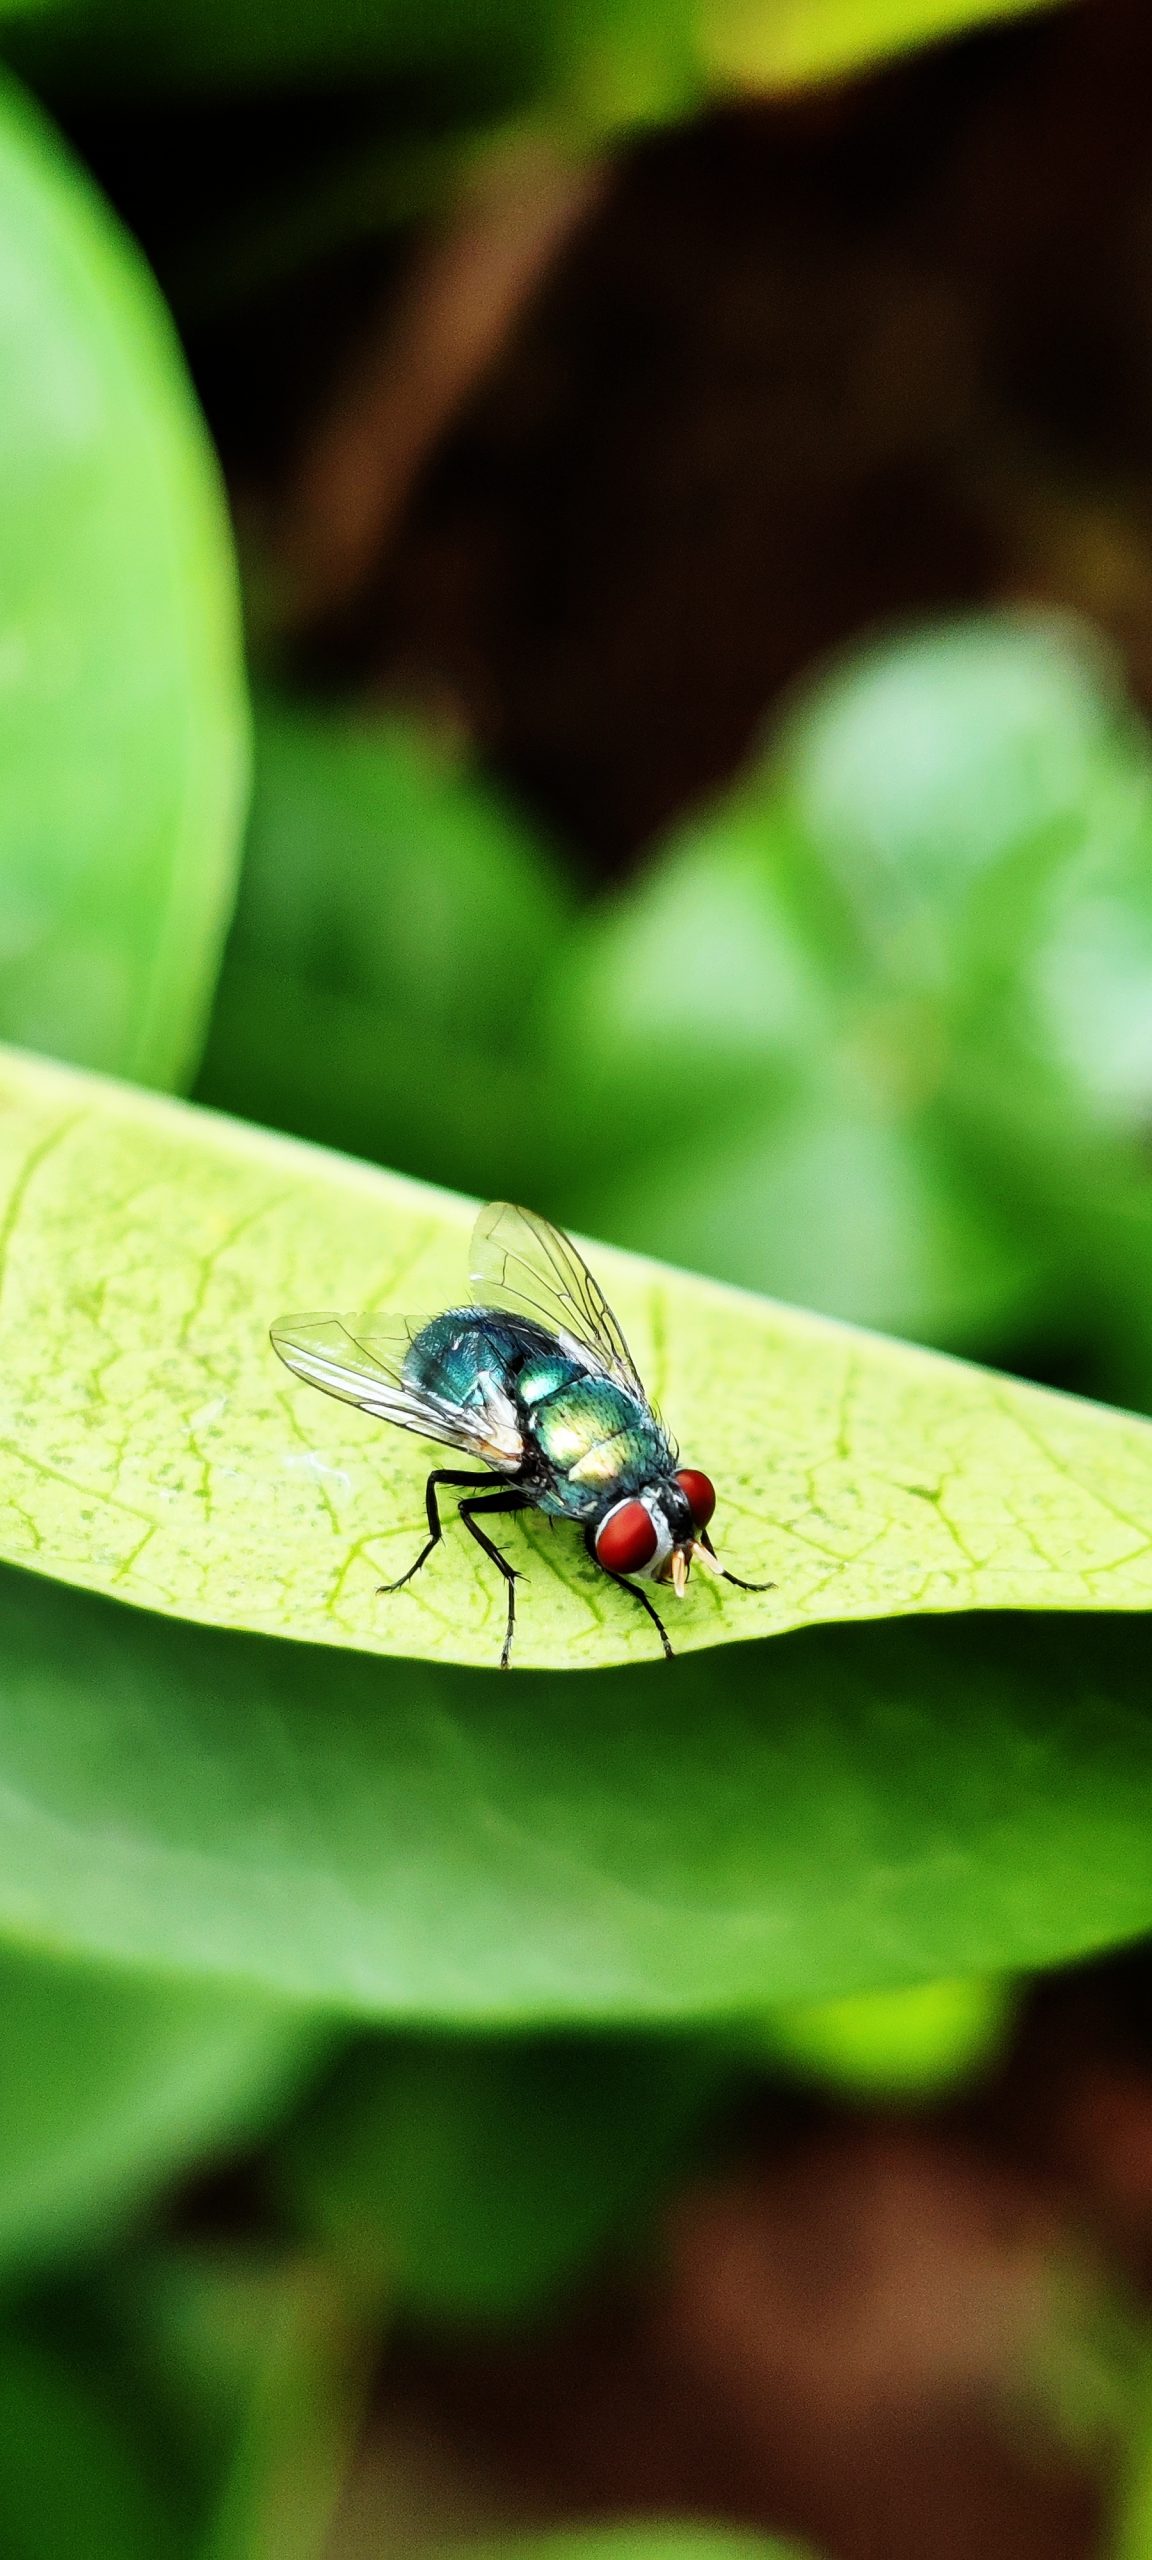 Housefly on leaf